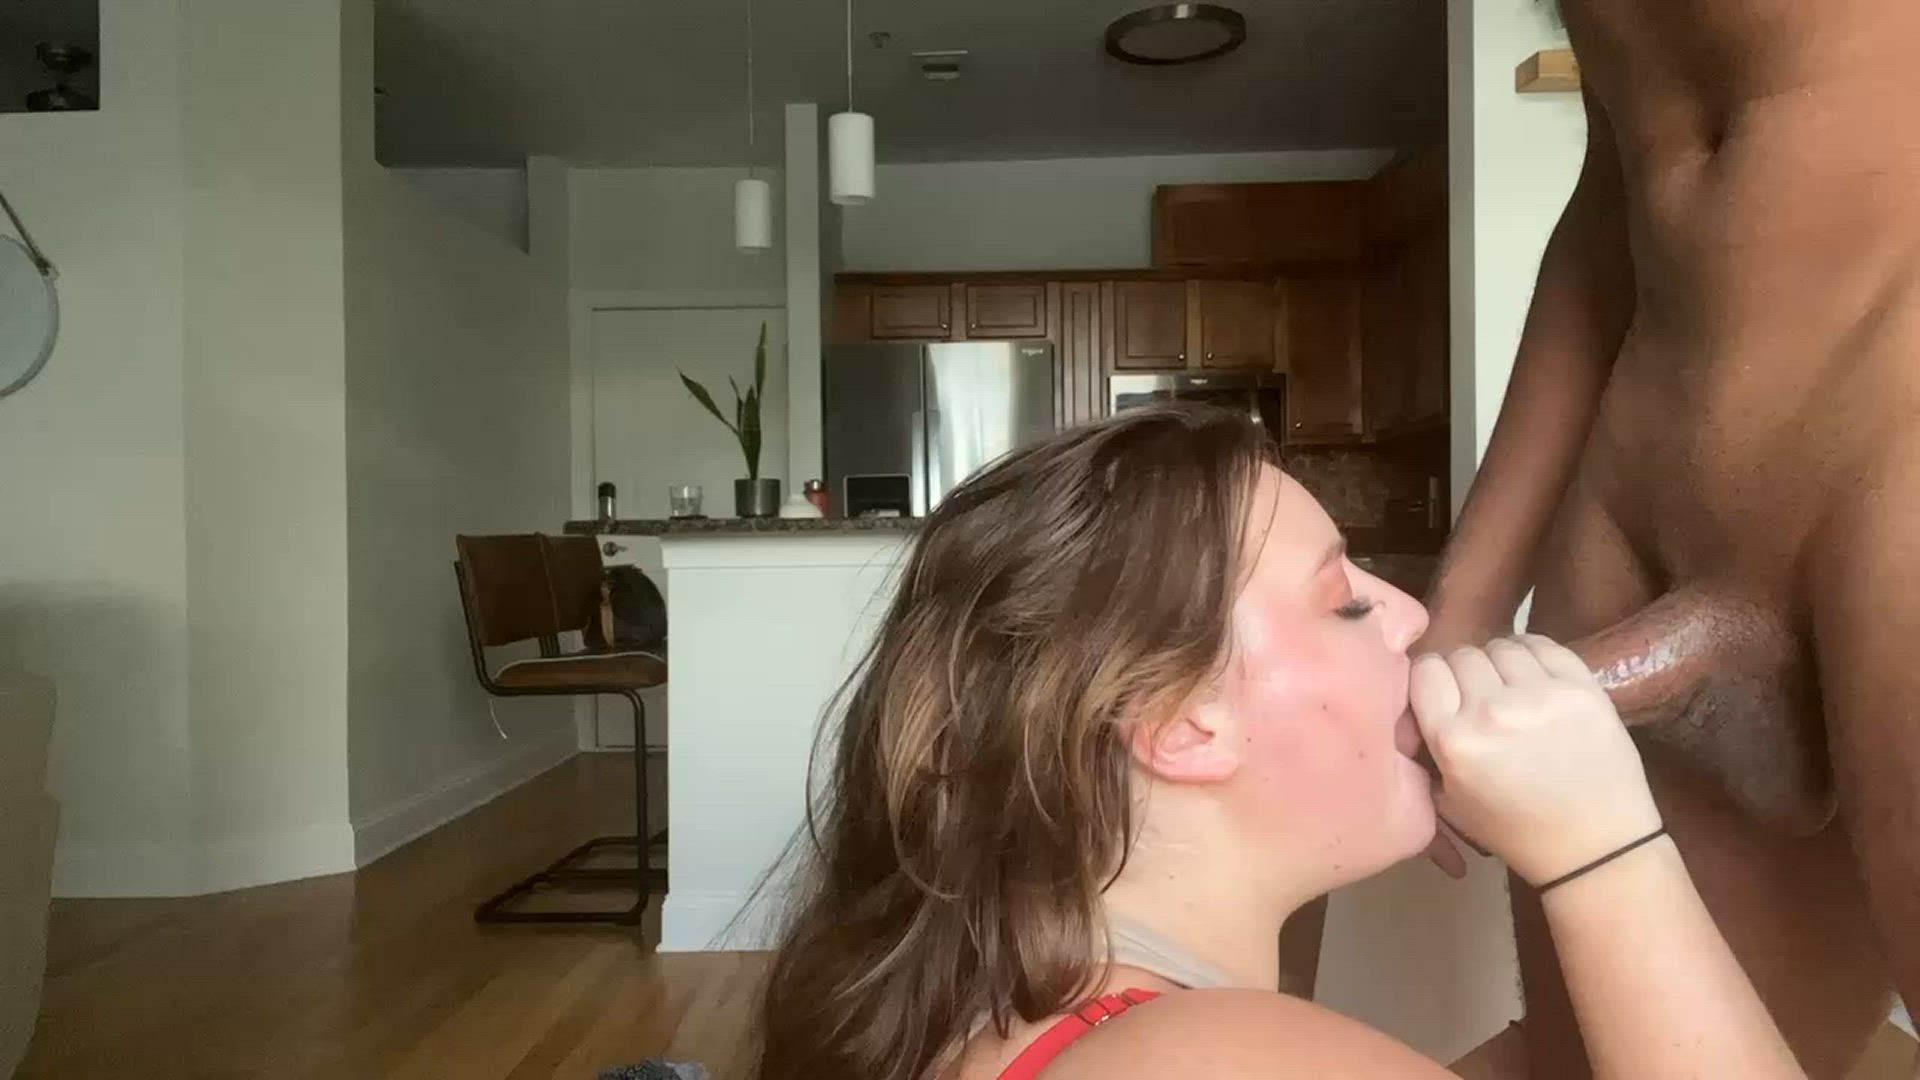 Facial porn video with onlyfans model Anna Lynn <strong>@annalynn</strong>